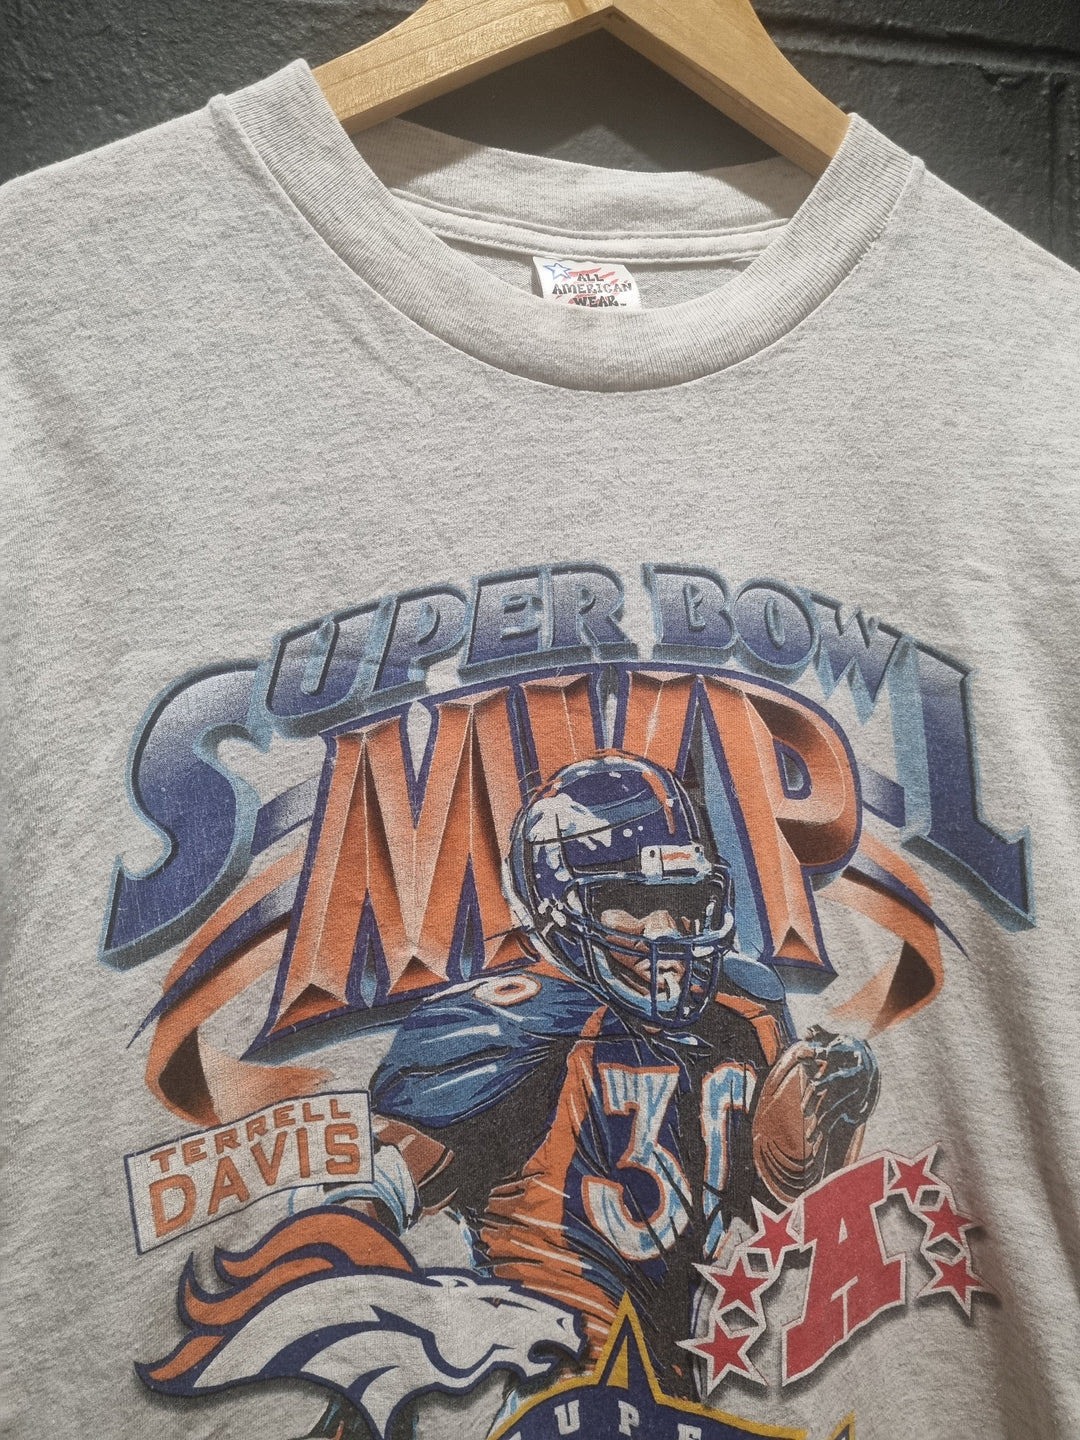 Super Bowl MVP Terrell Davis 1998 Large